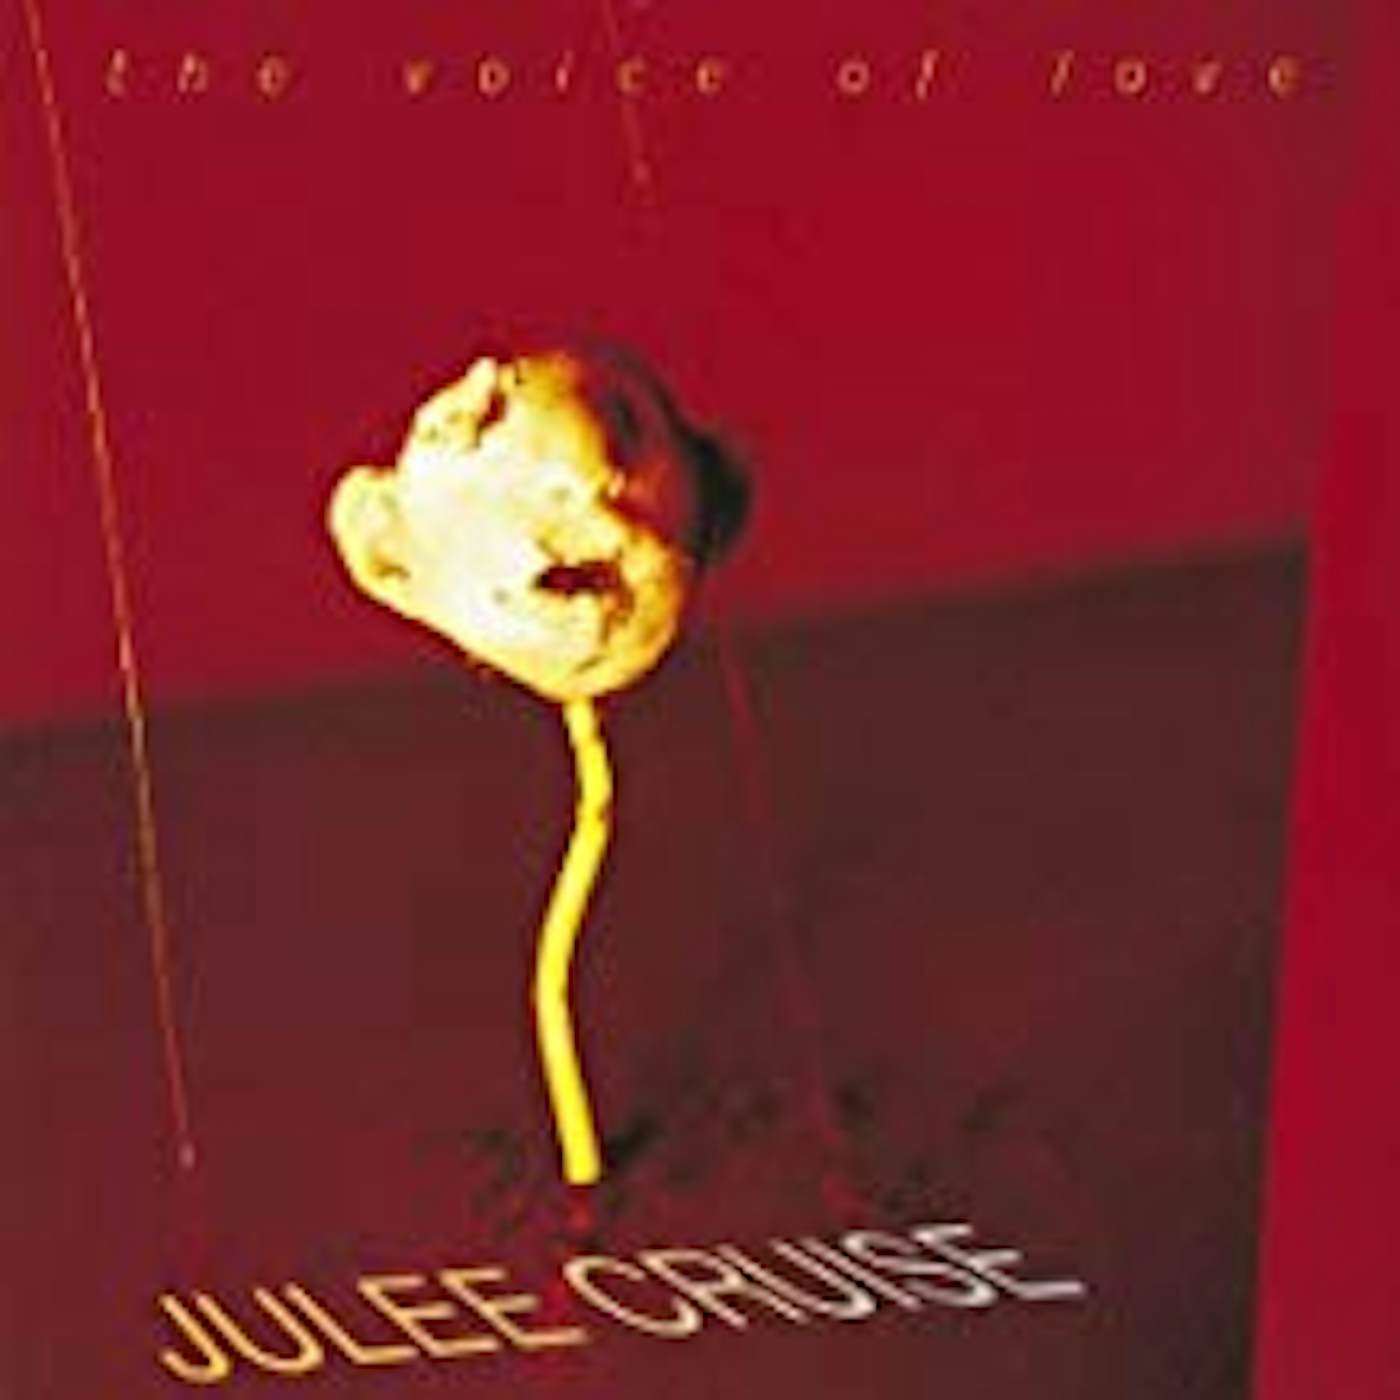 Julee Cruise VOICE OF LOVE Vinyl Record